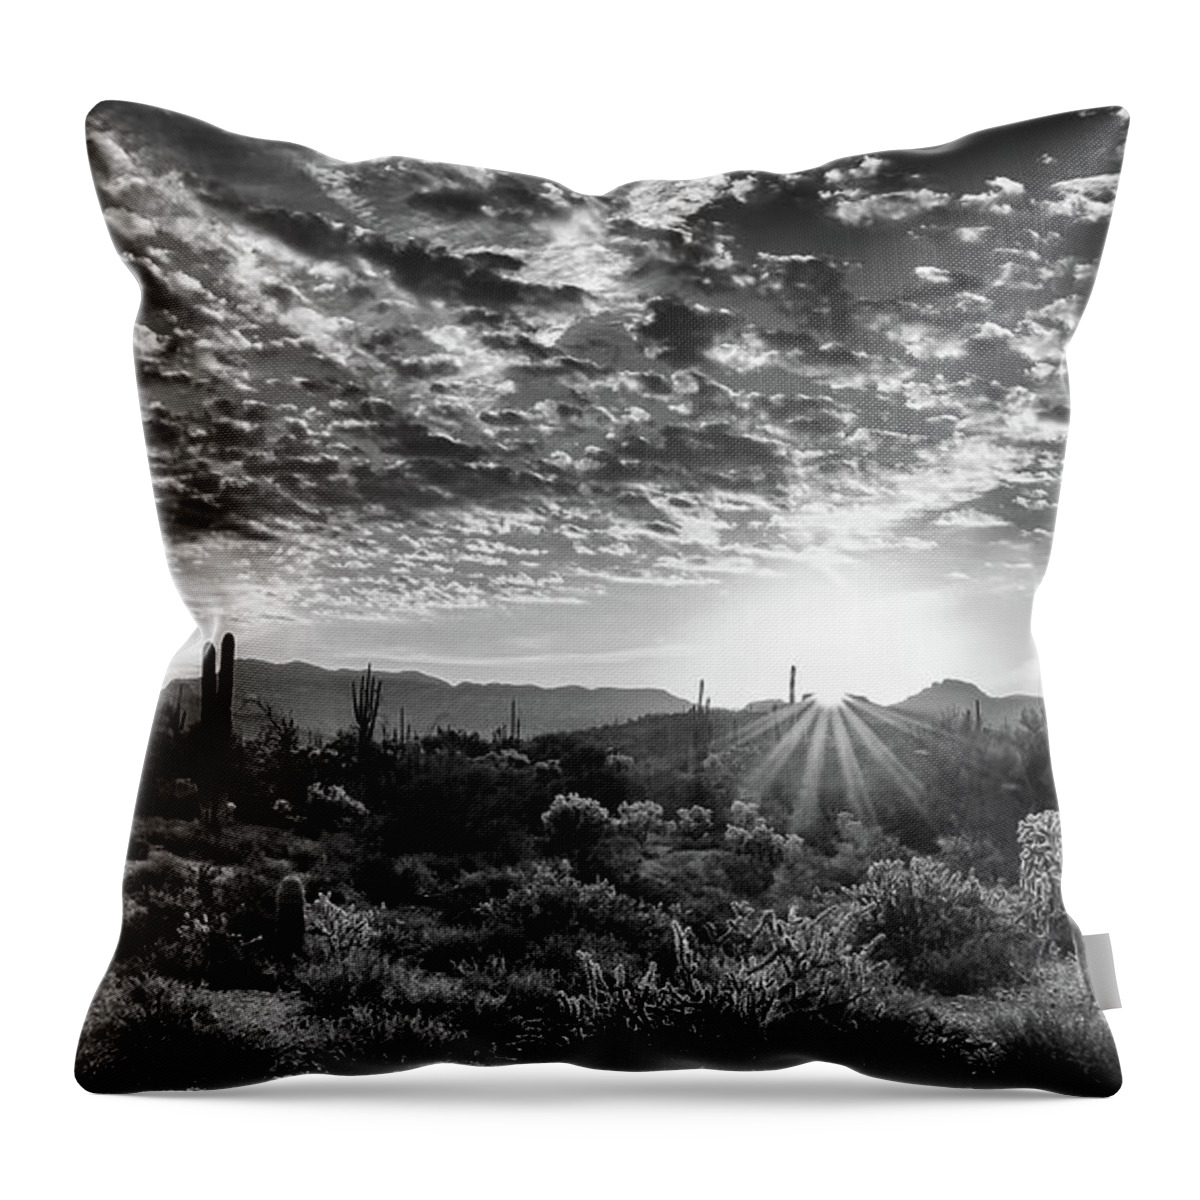 Arizona Trip 2016 Throw Pillow featuring the photograph Desert Sunrise by Monte Stevens